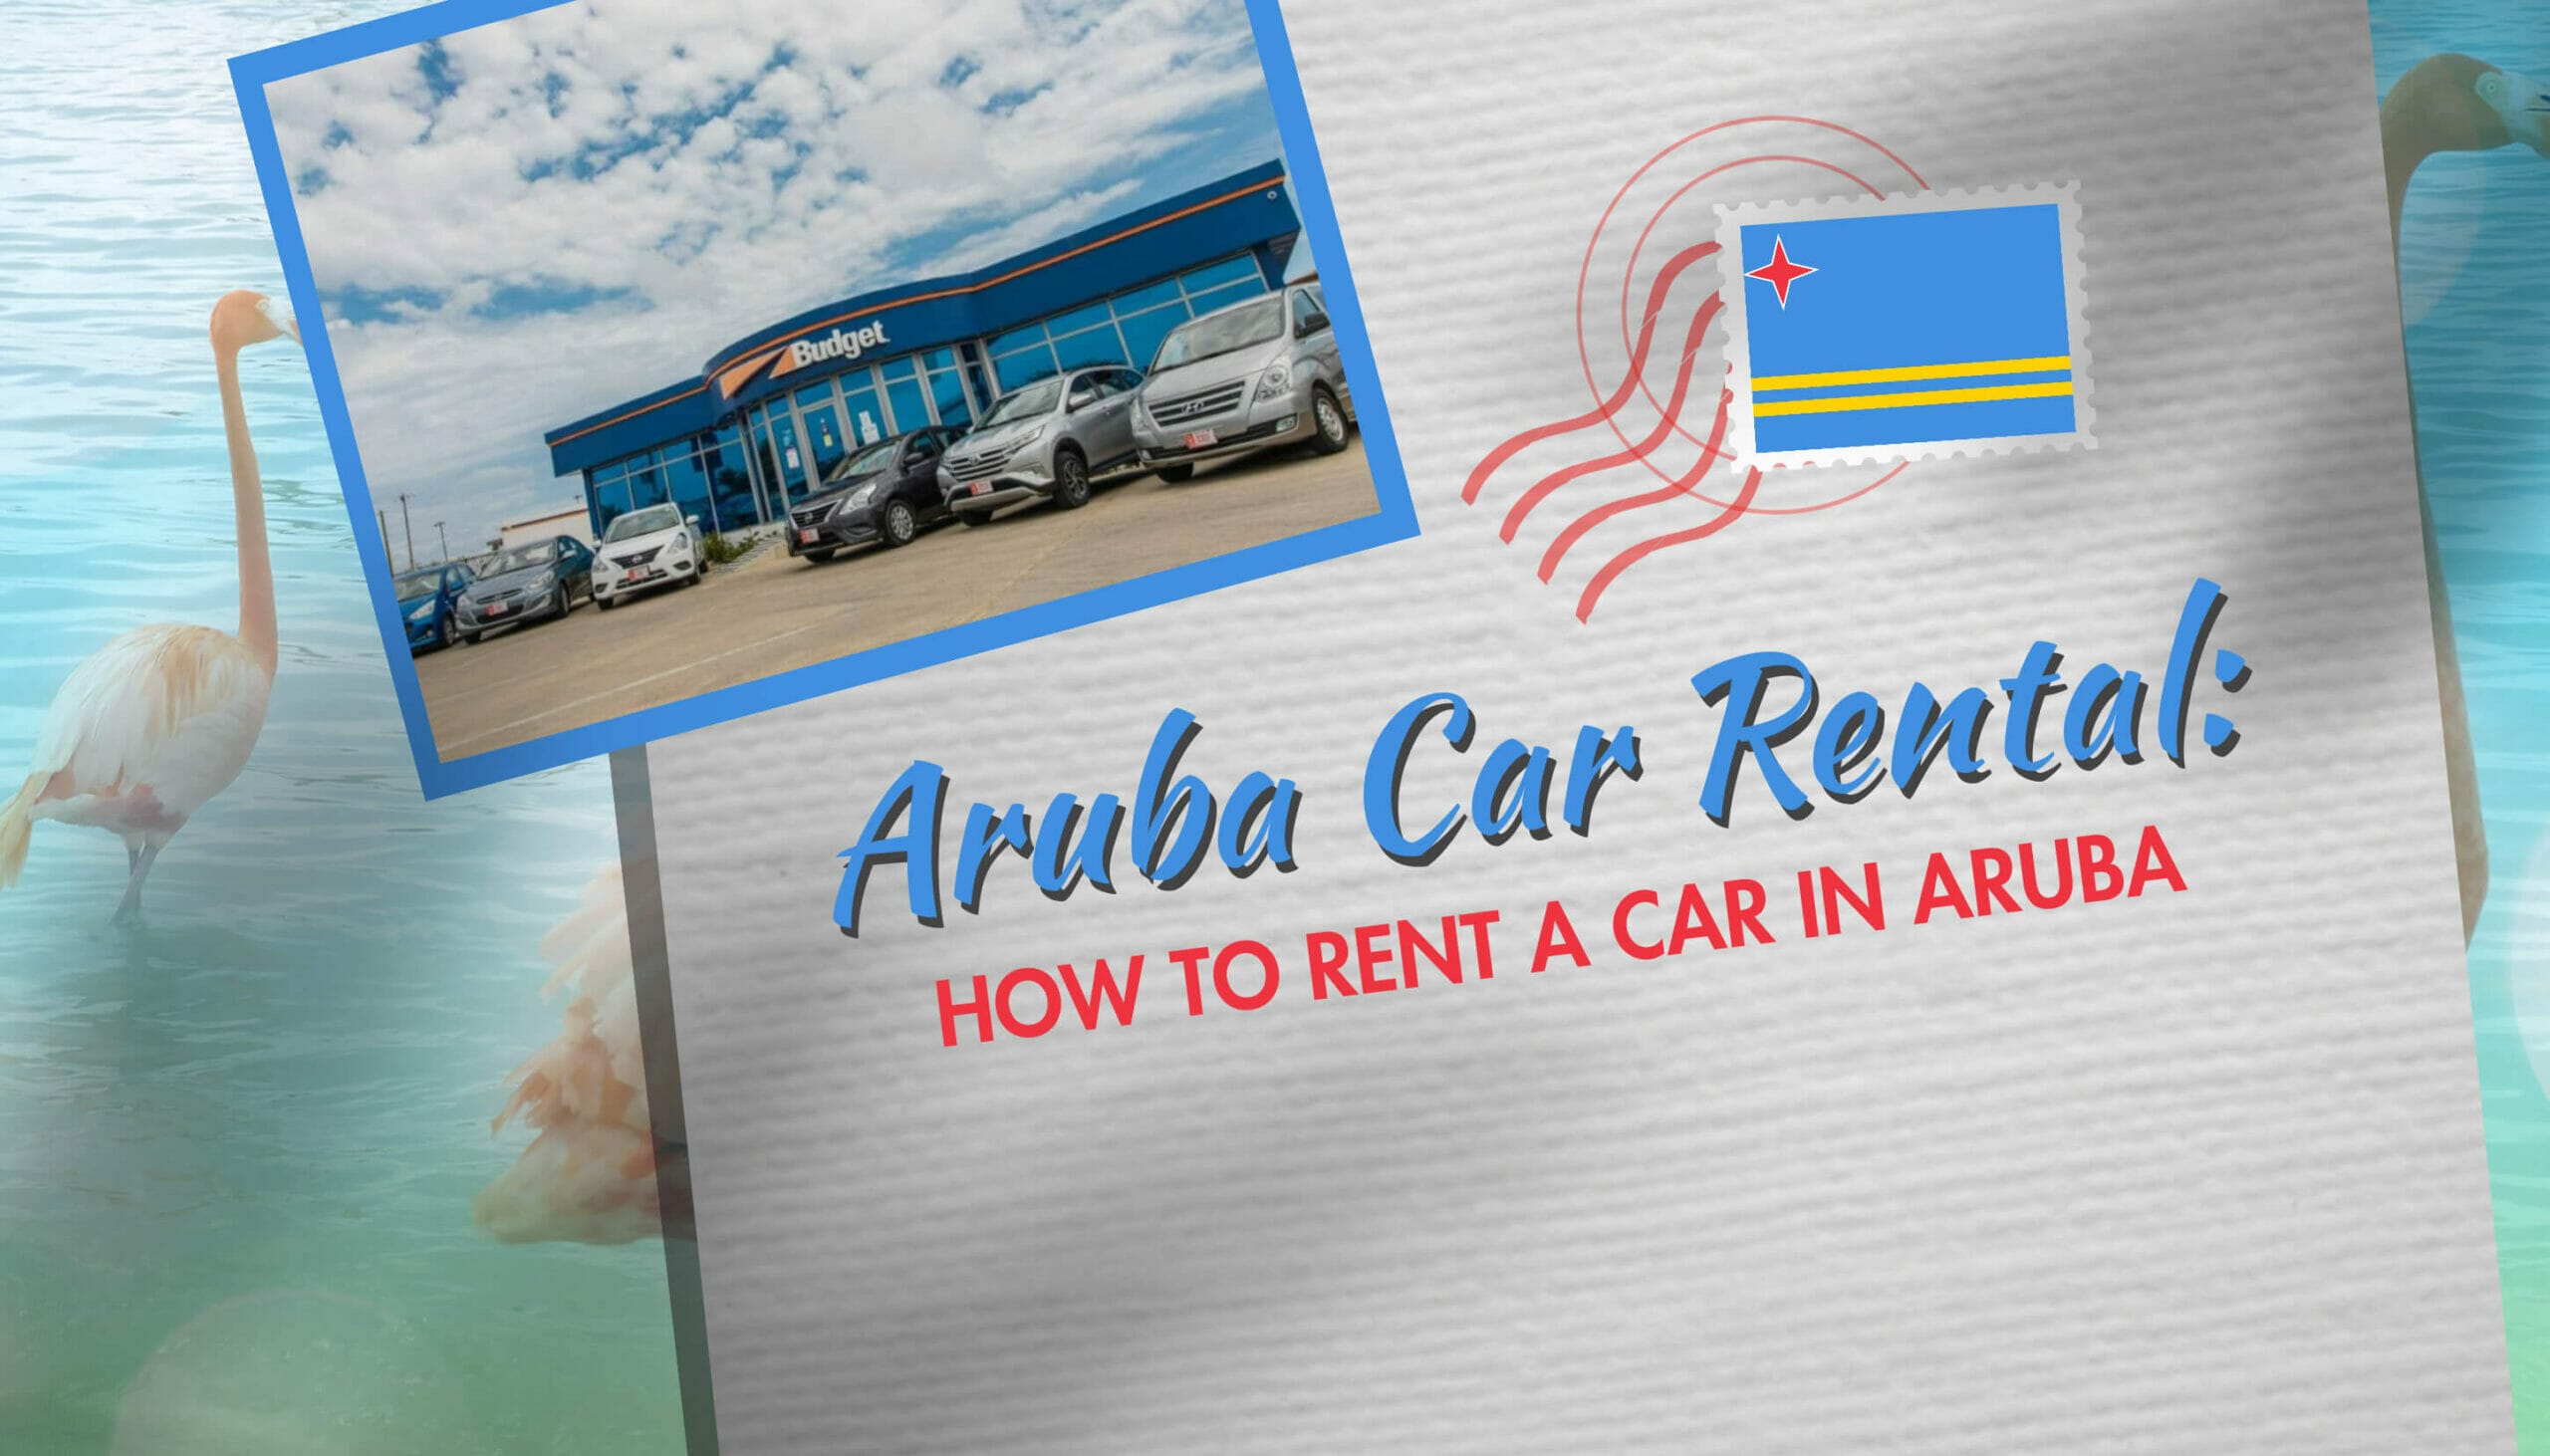 Aruba Car Rental How to Rent a Car in Aruba